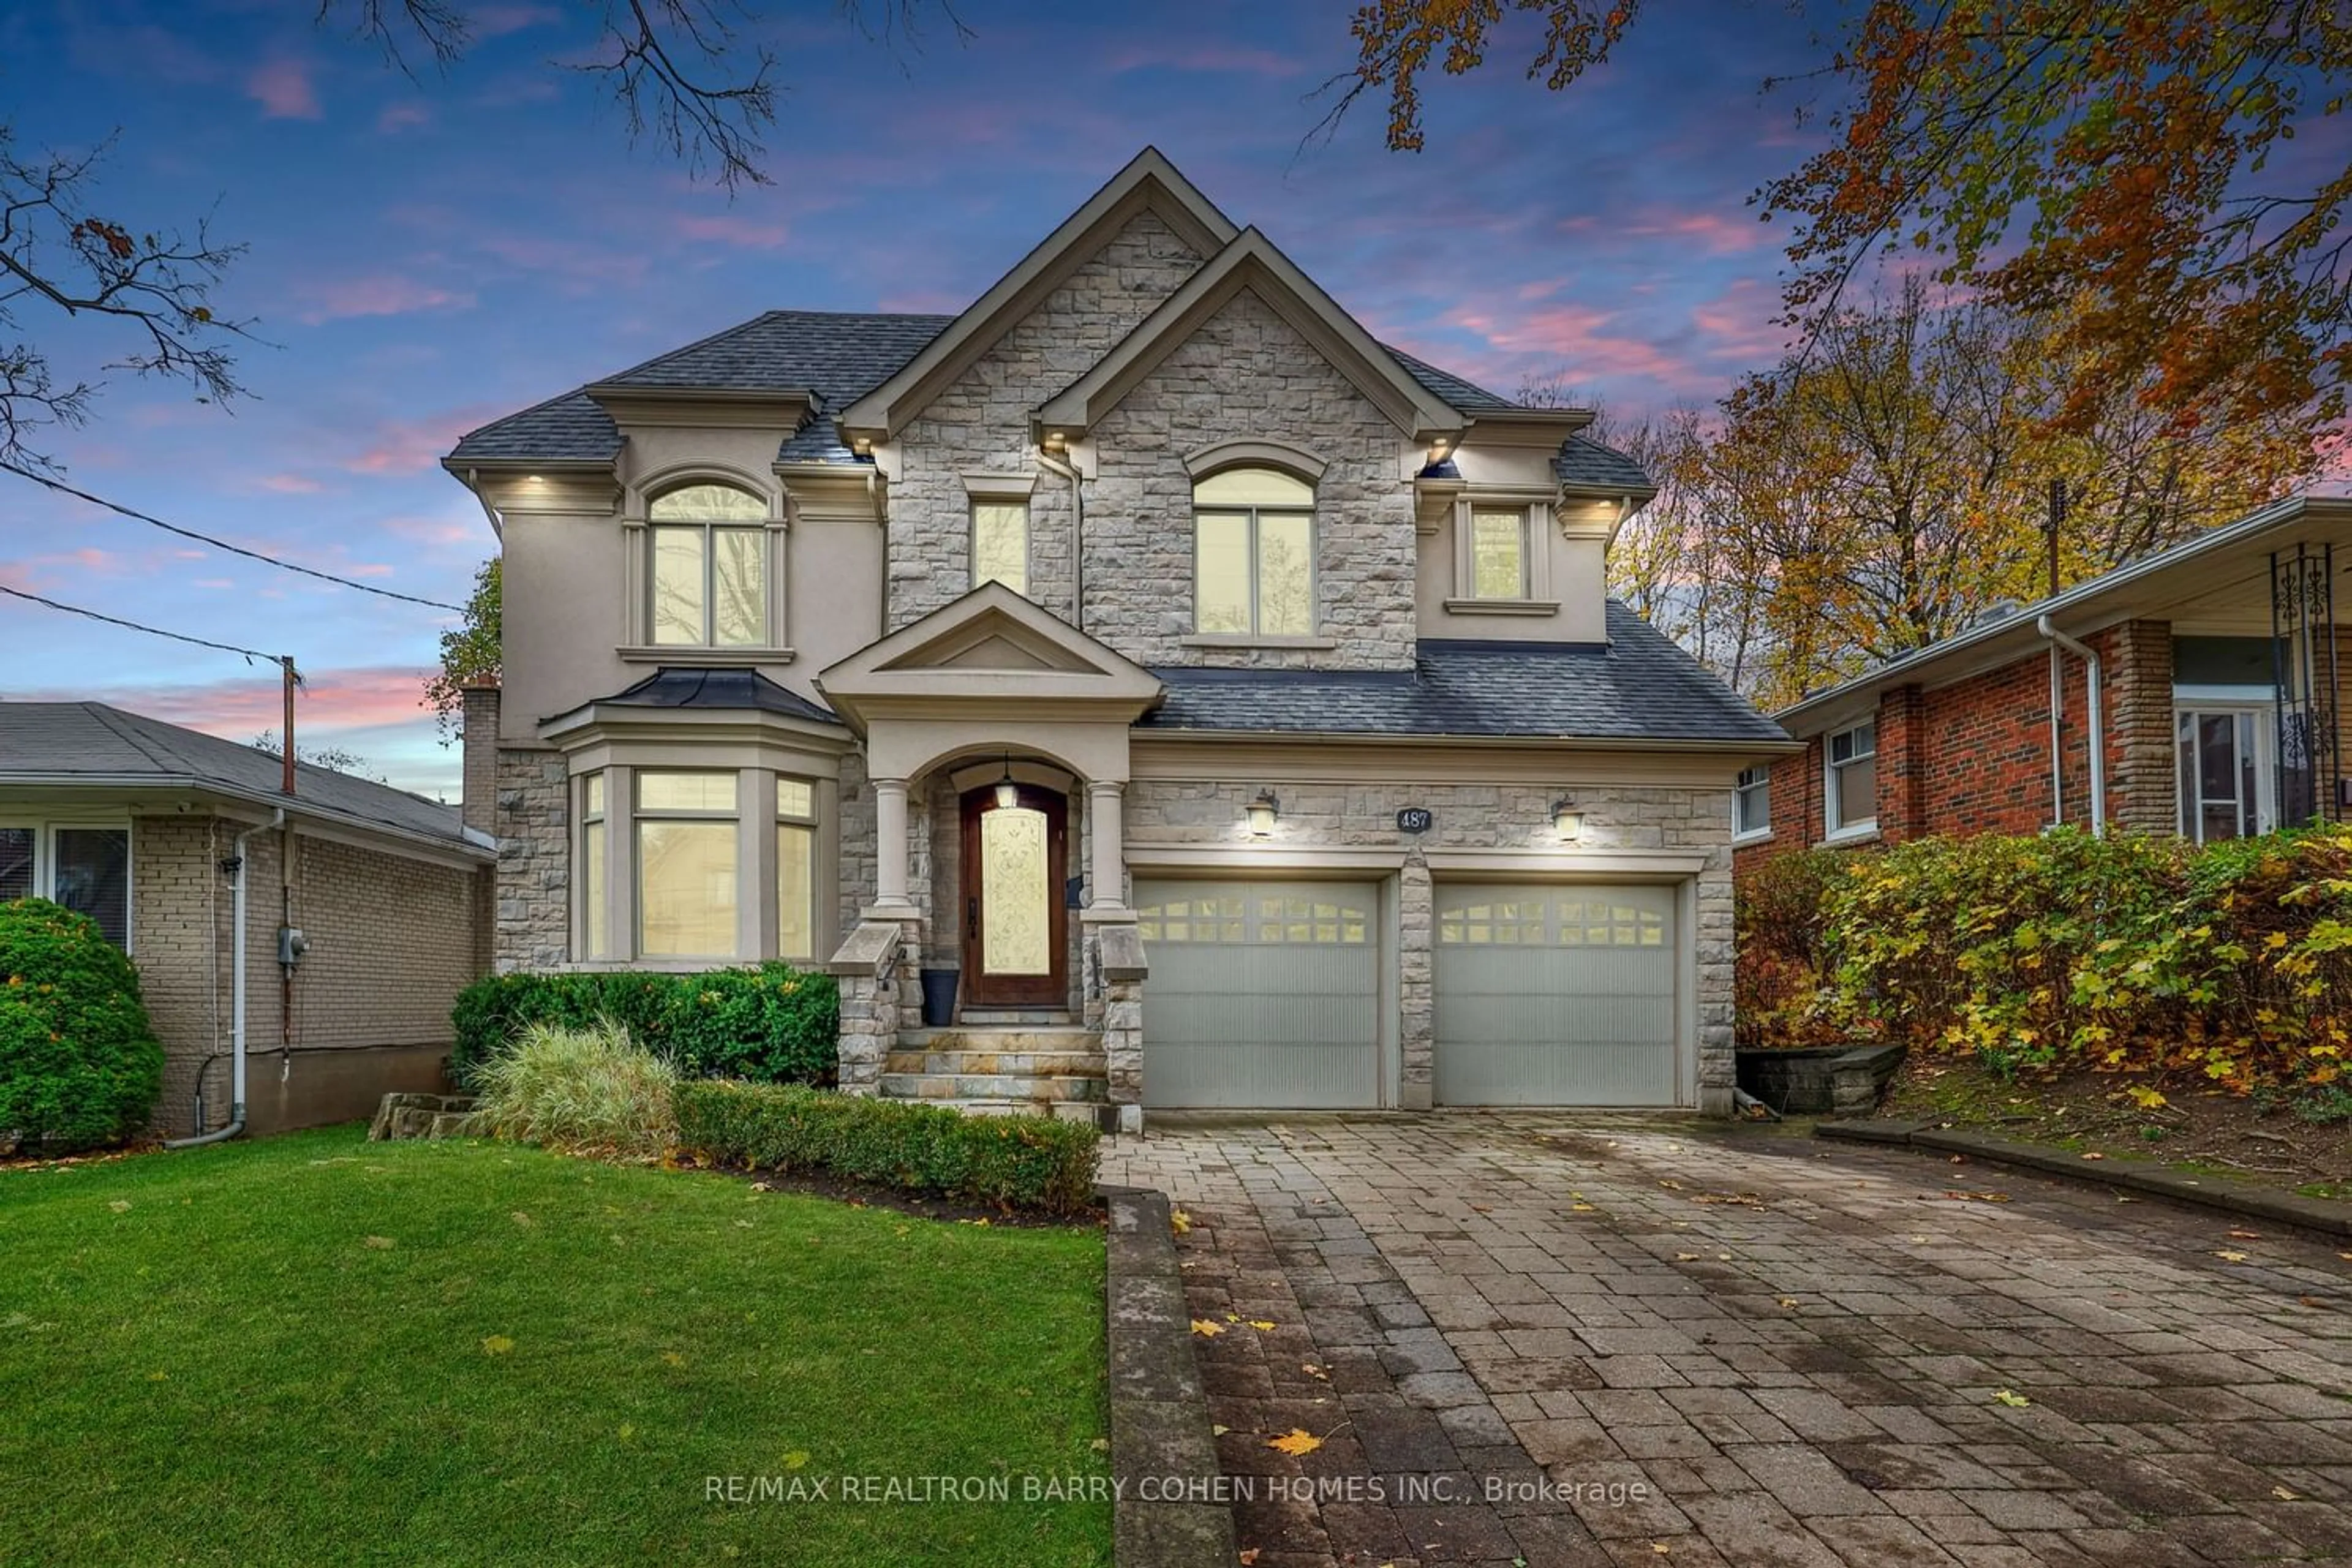 Home with brick exterior material for 487 Glengarry Ave, Toronto Ontario M5M 1E9